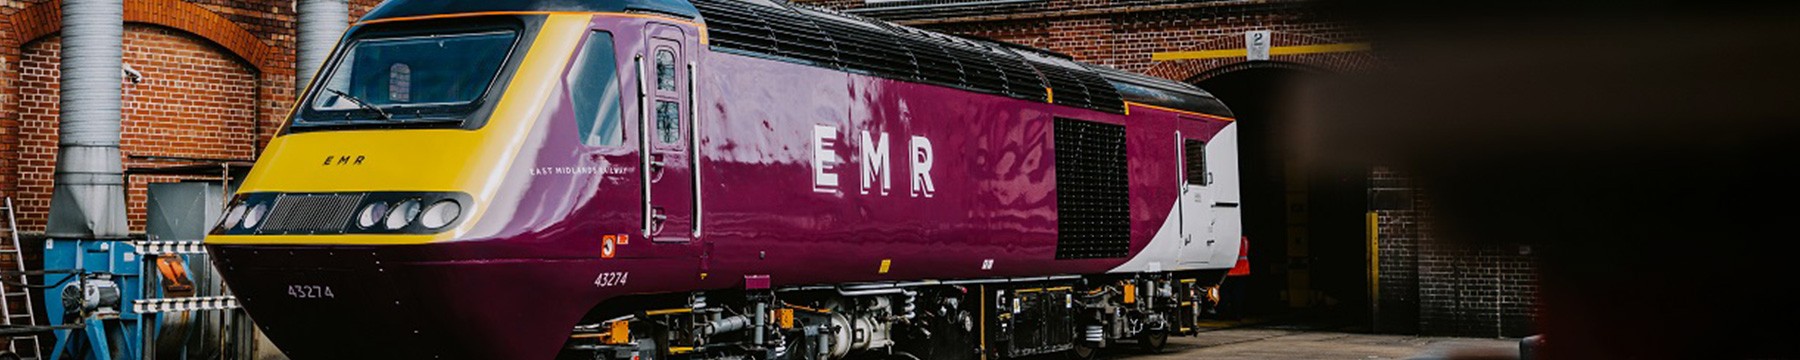 HST re-liveried in EMR brand colours